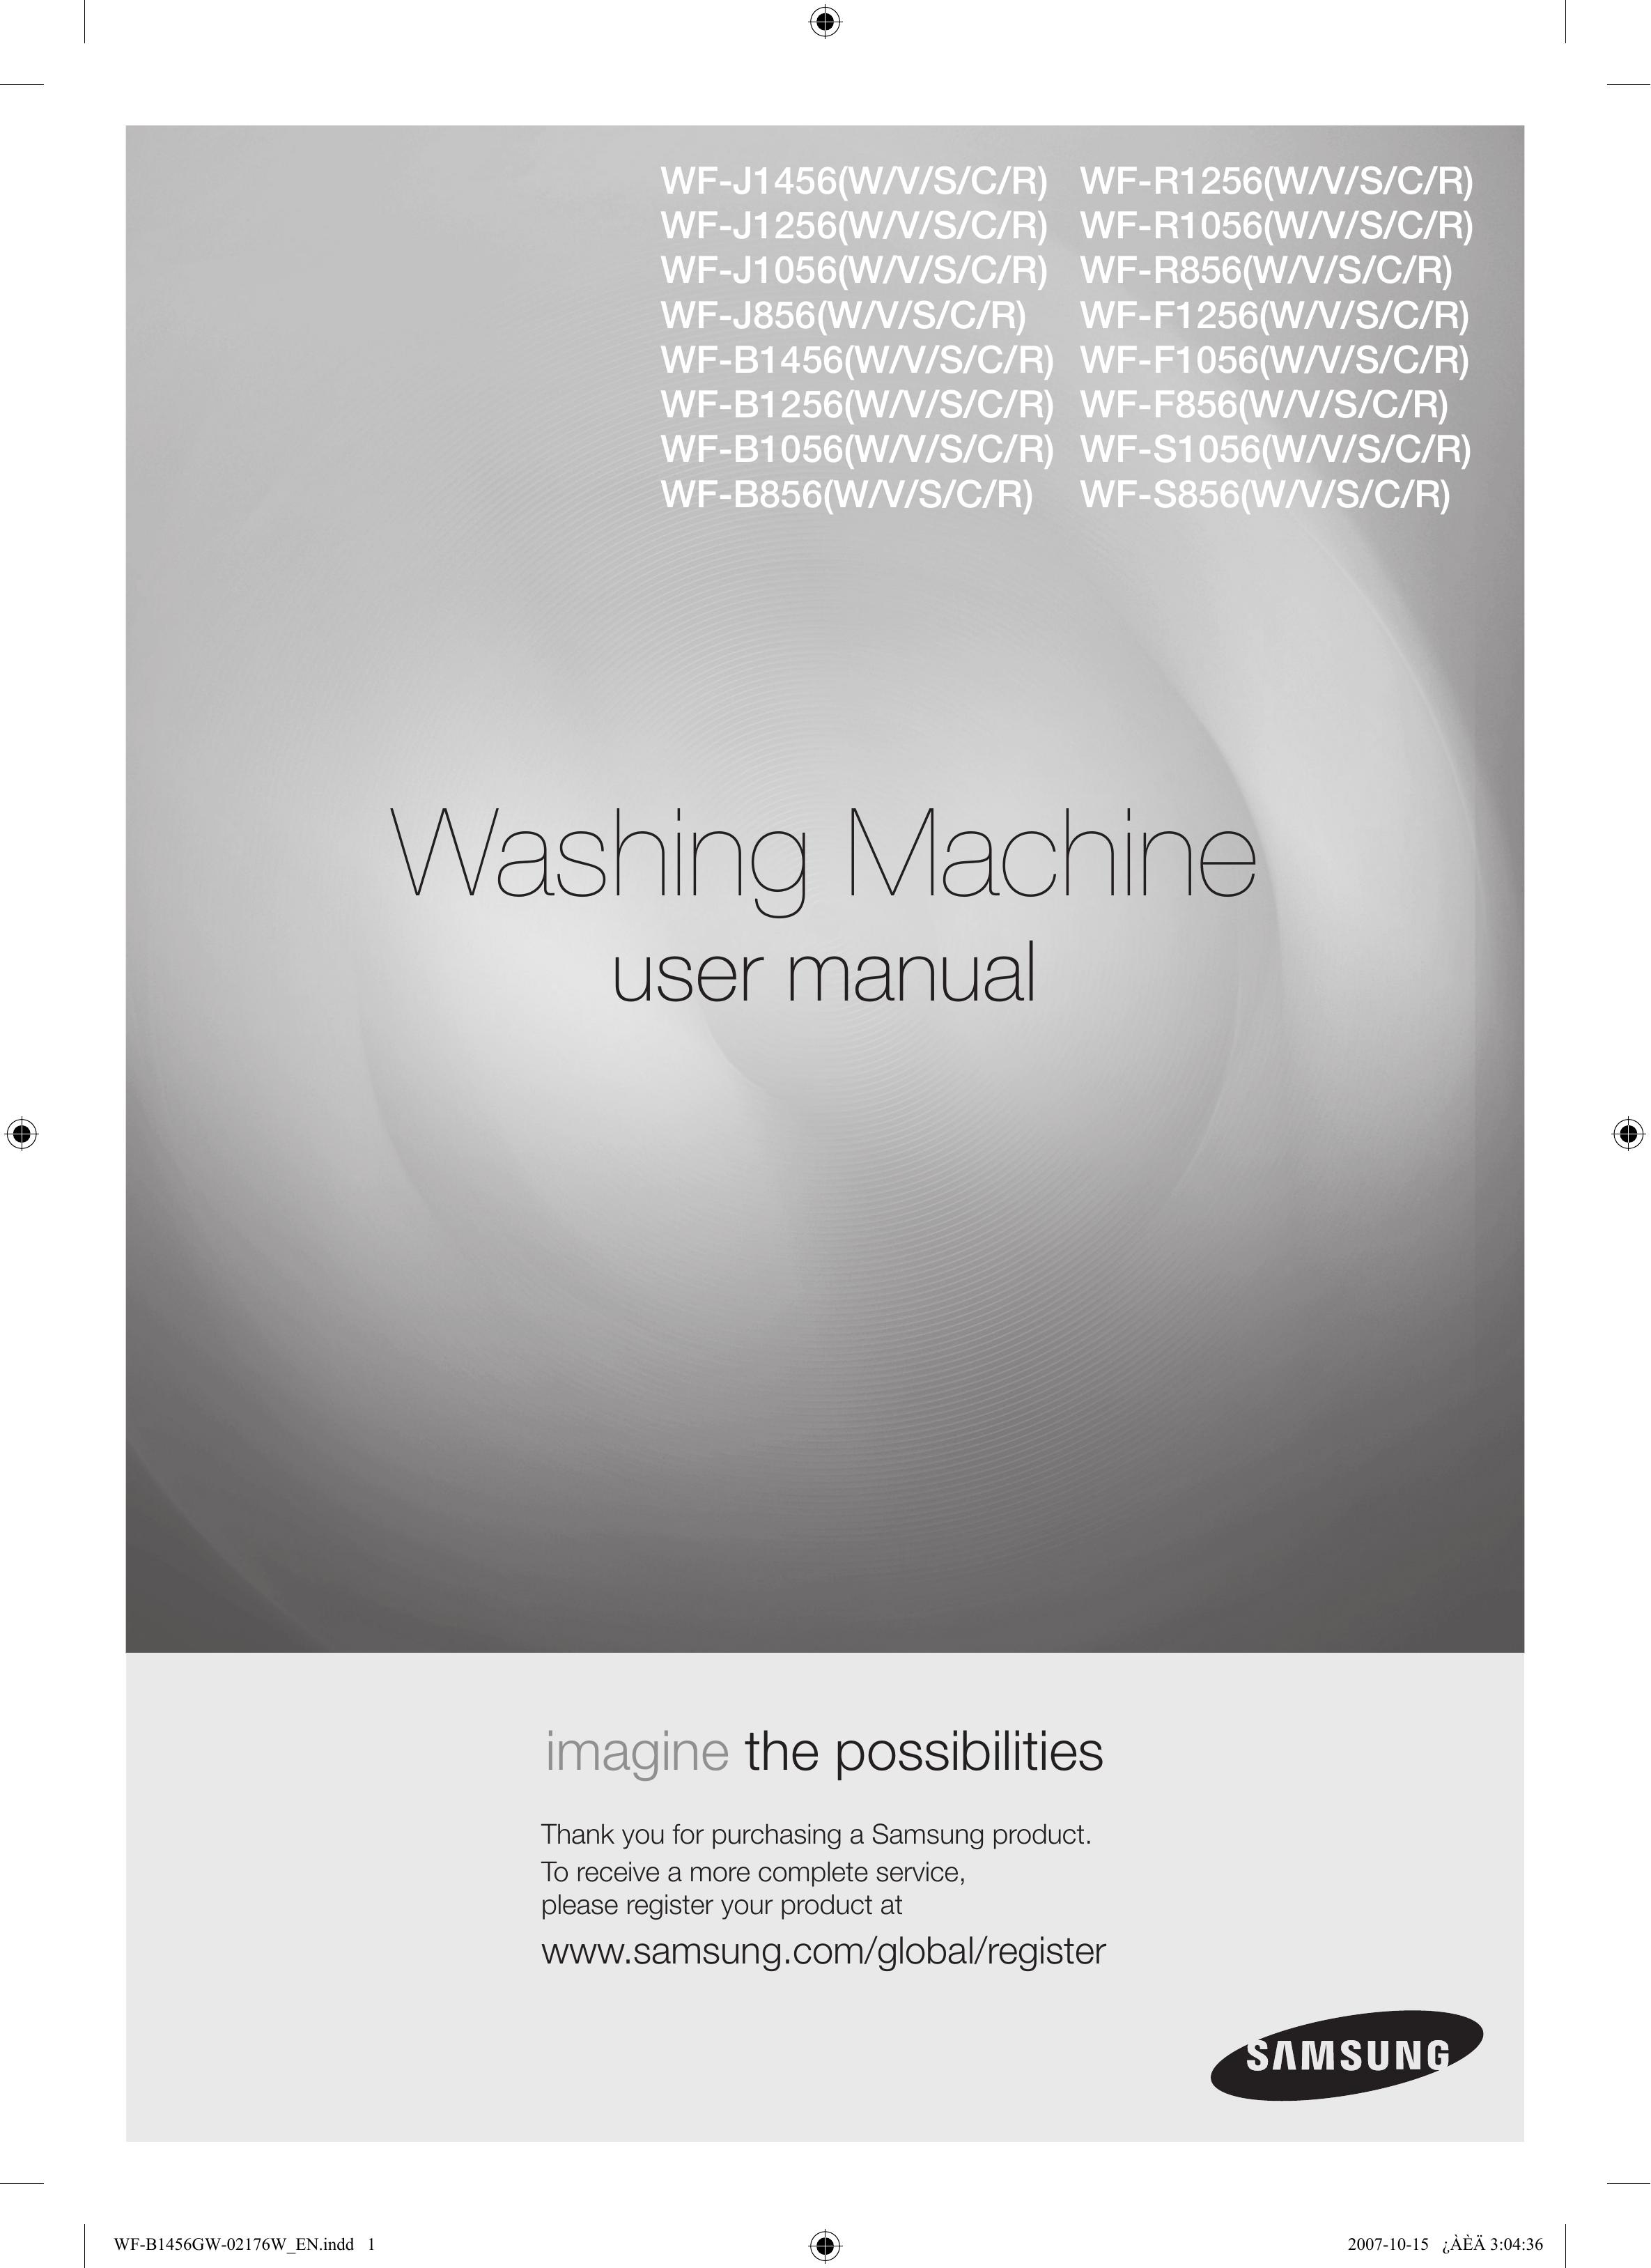 Samsung WF-B1456 Washer/Dryer User Manual